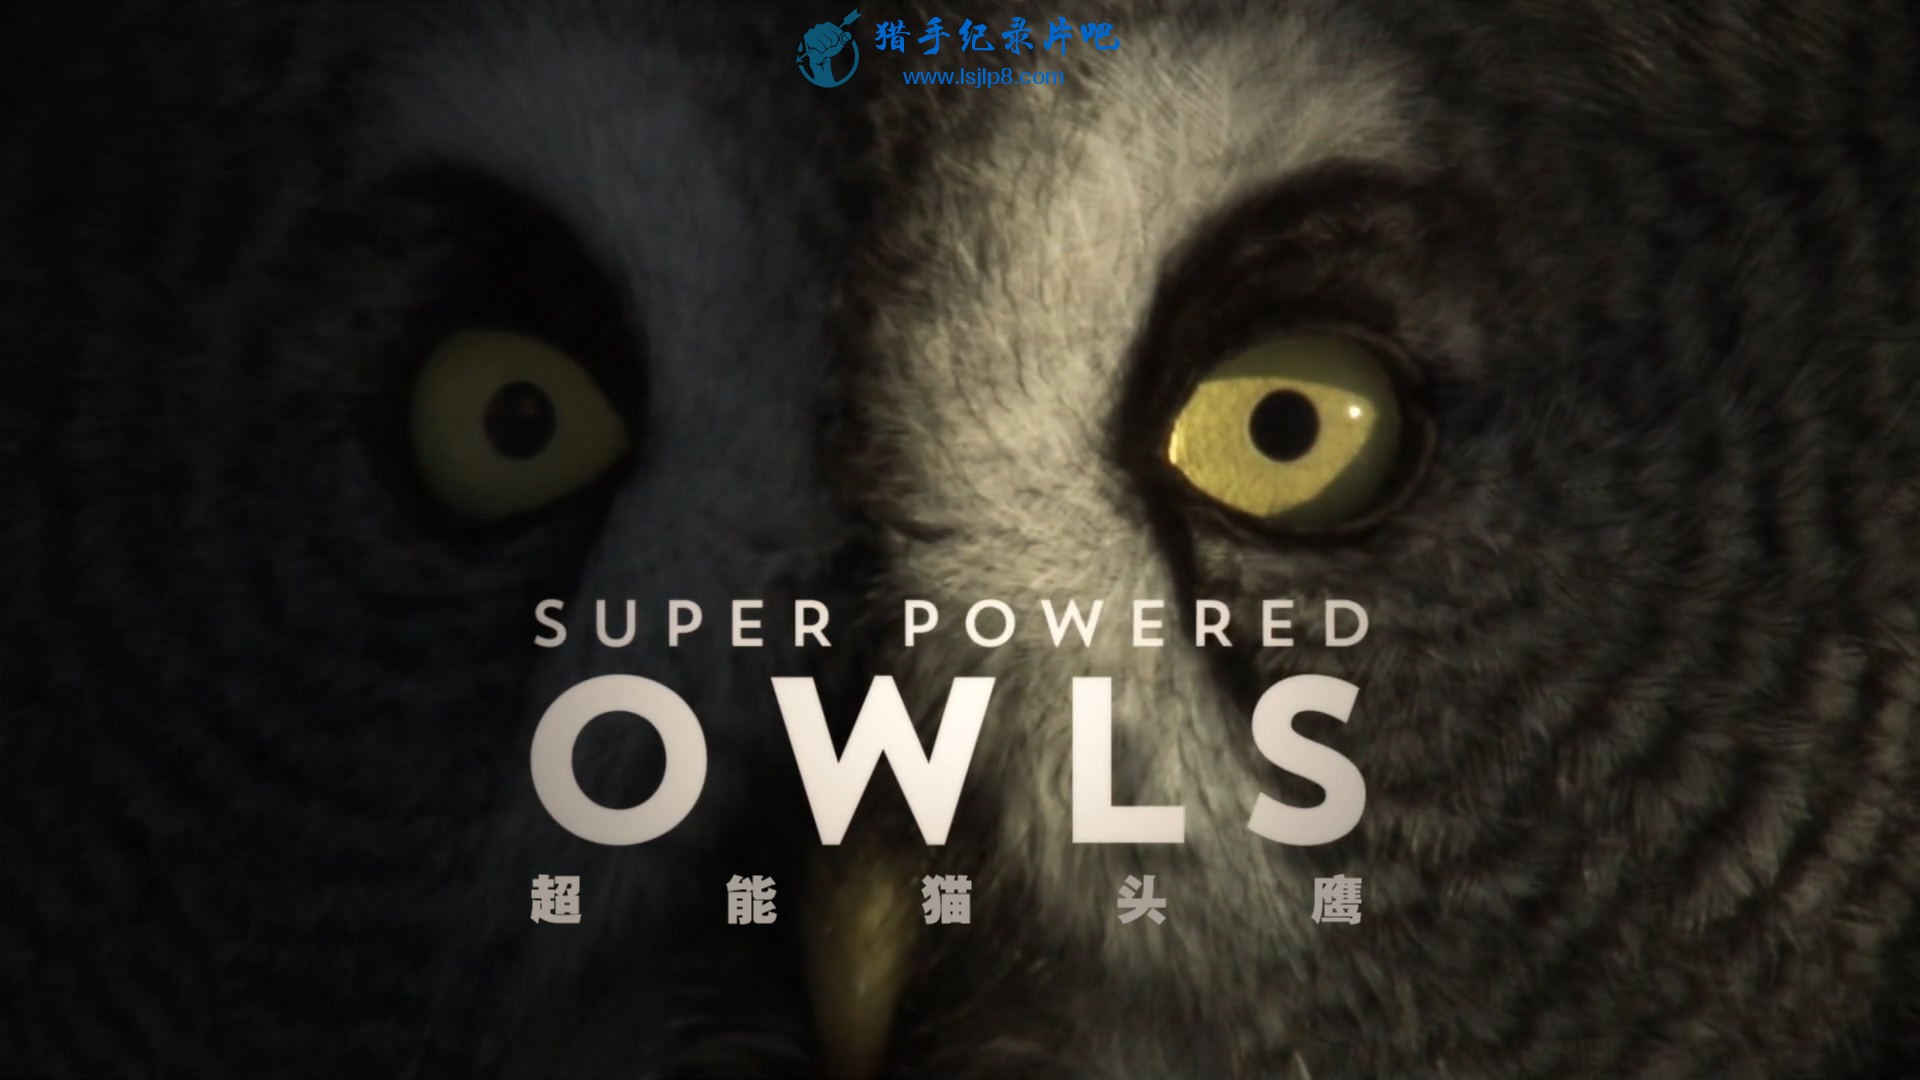 BBC.Natural.World.2015.Super.Powered.Owls.1080p.HDTV.x264.AAC.MVGroup.org.jpg